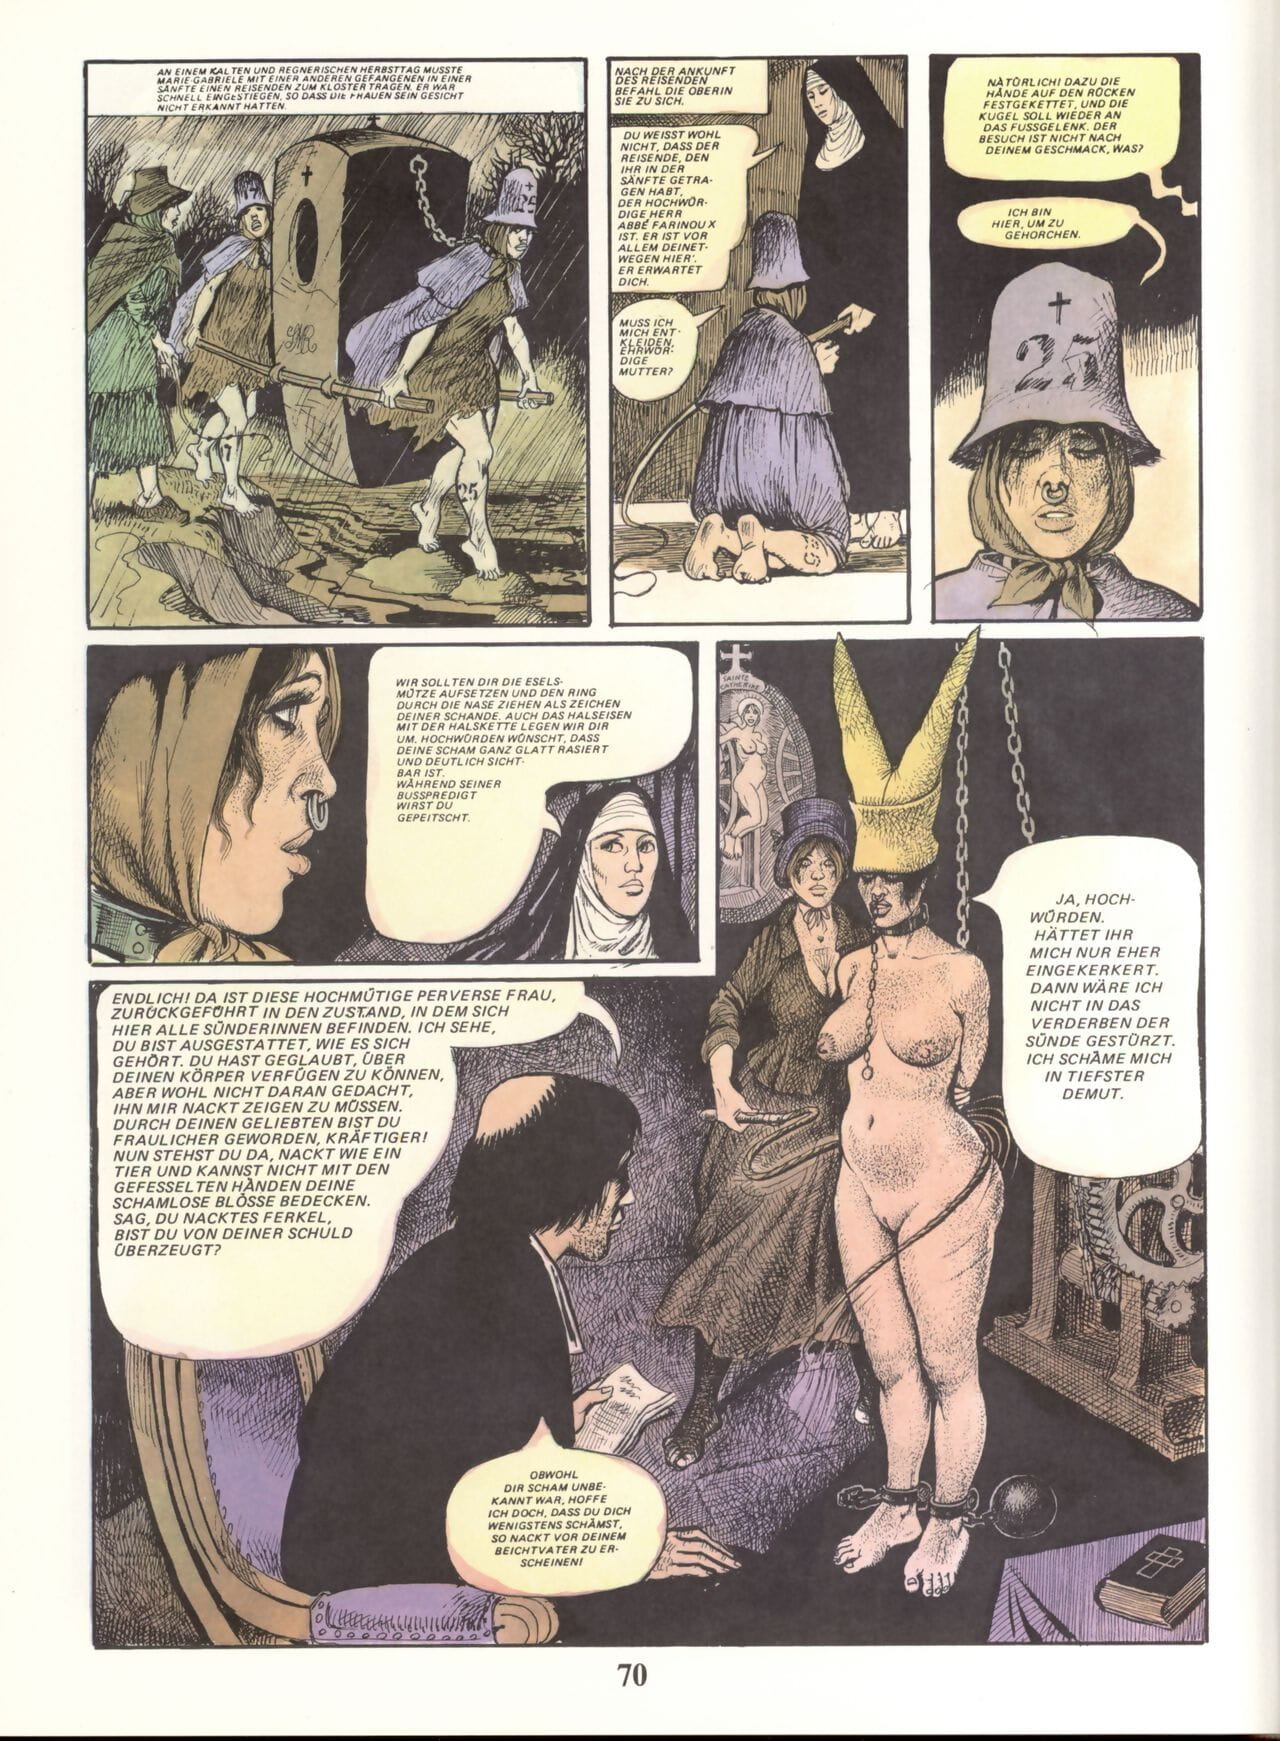 Marie Gabriel De St eutropa #02 część 4 page 1